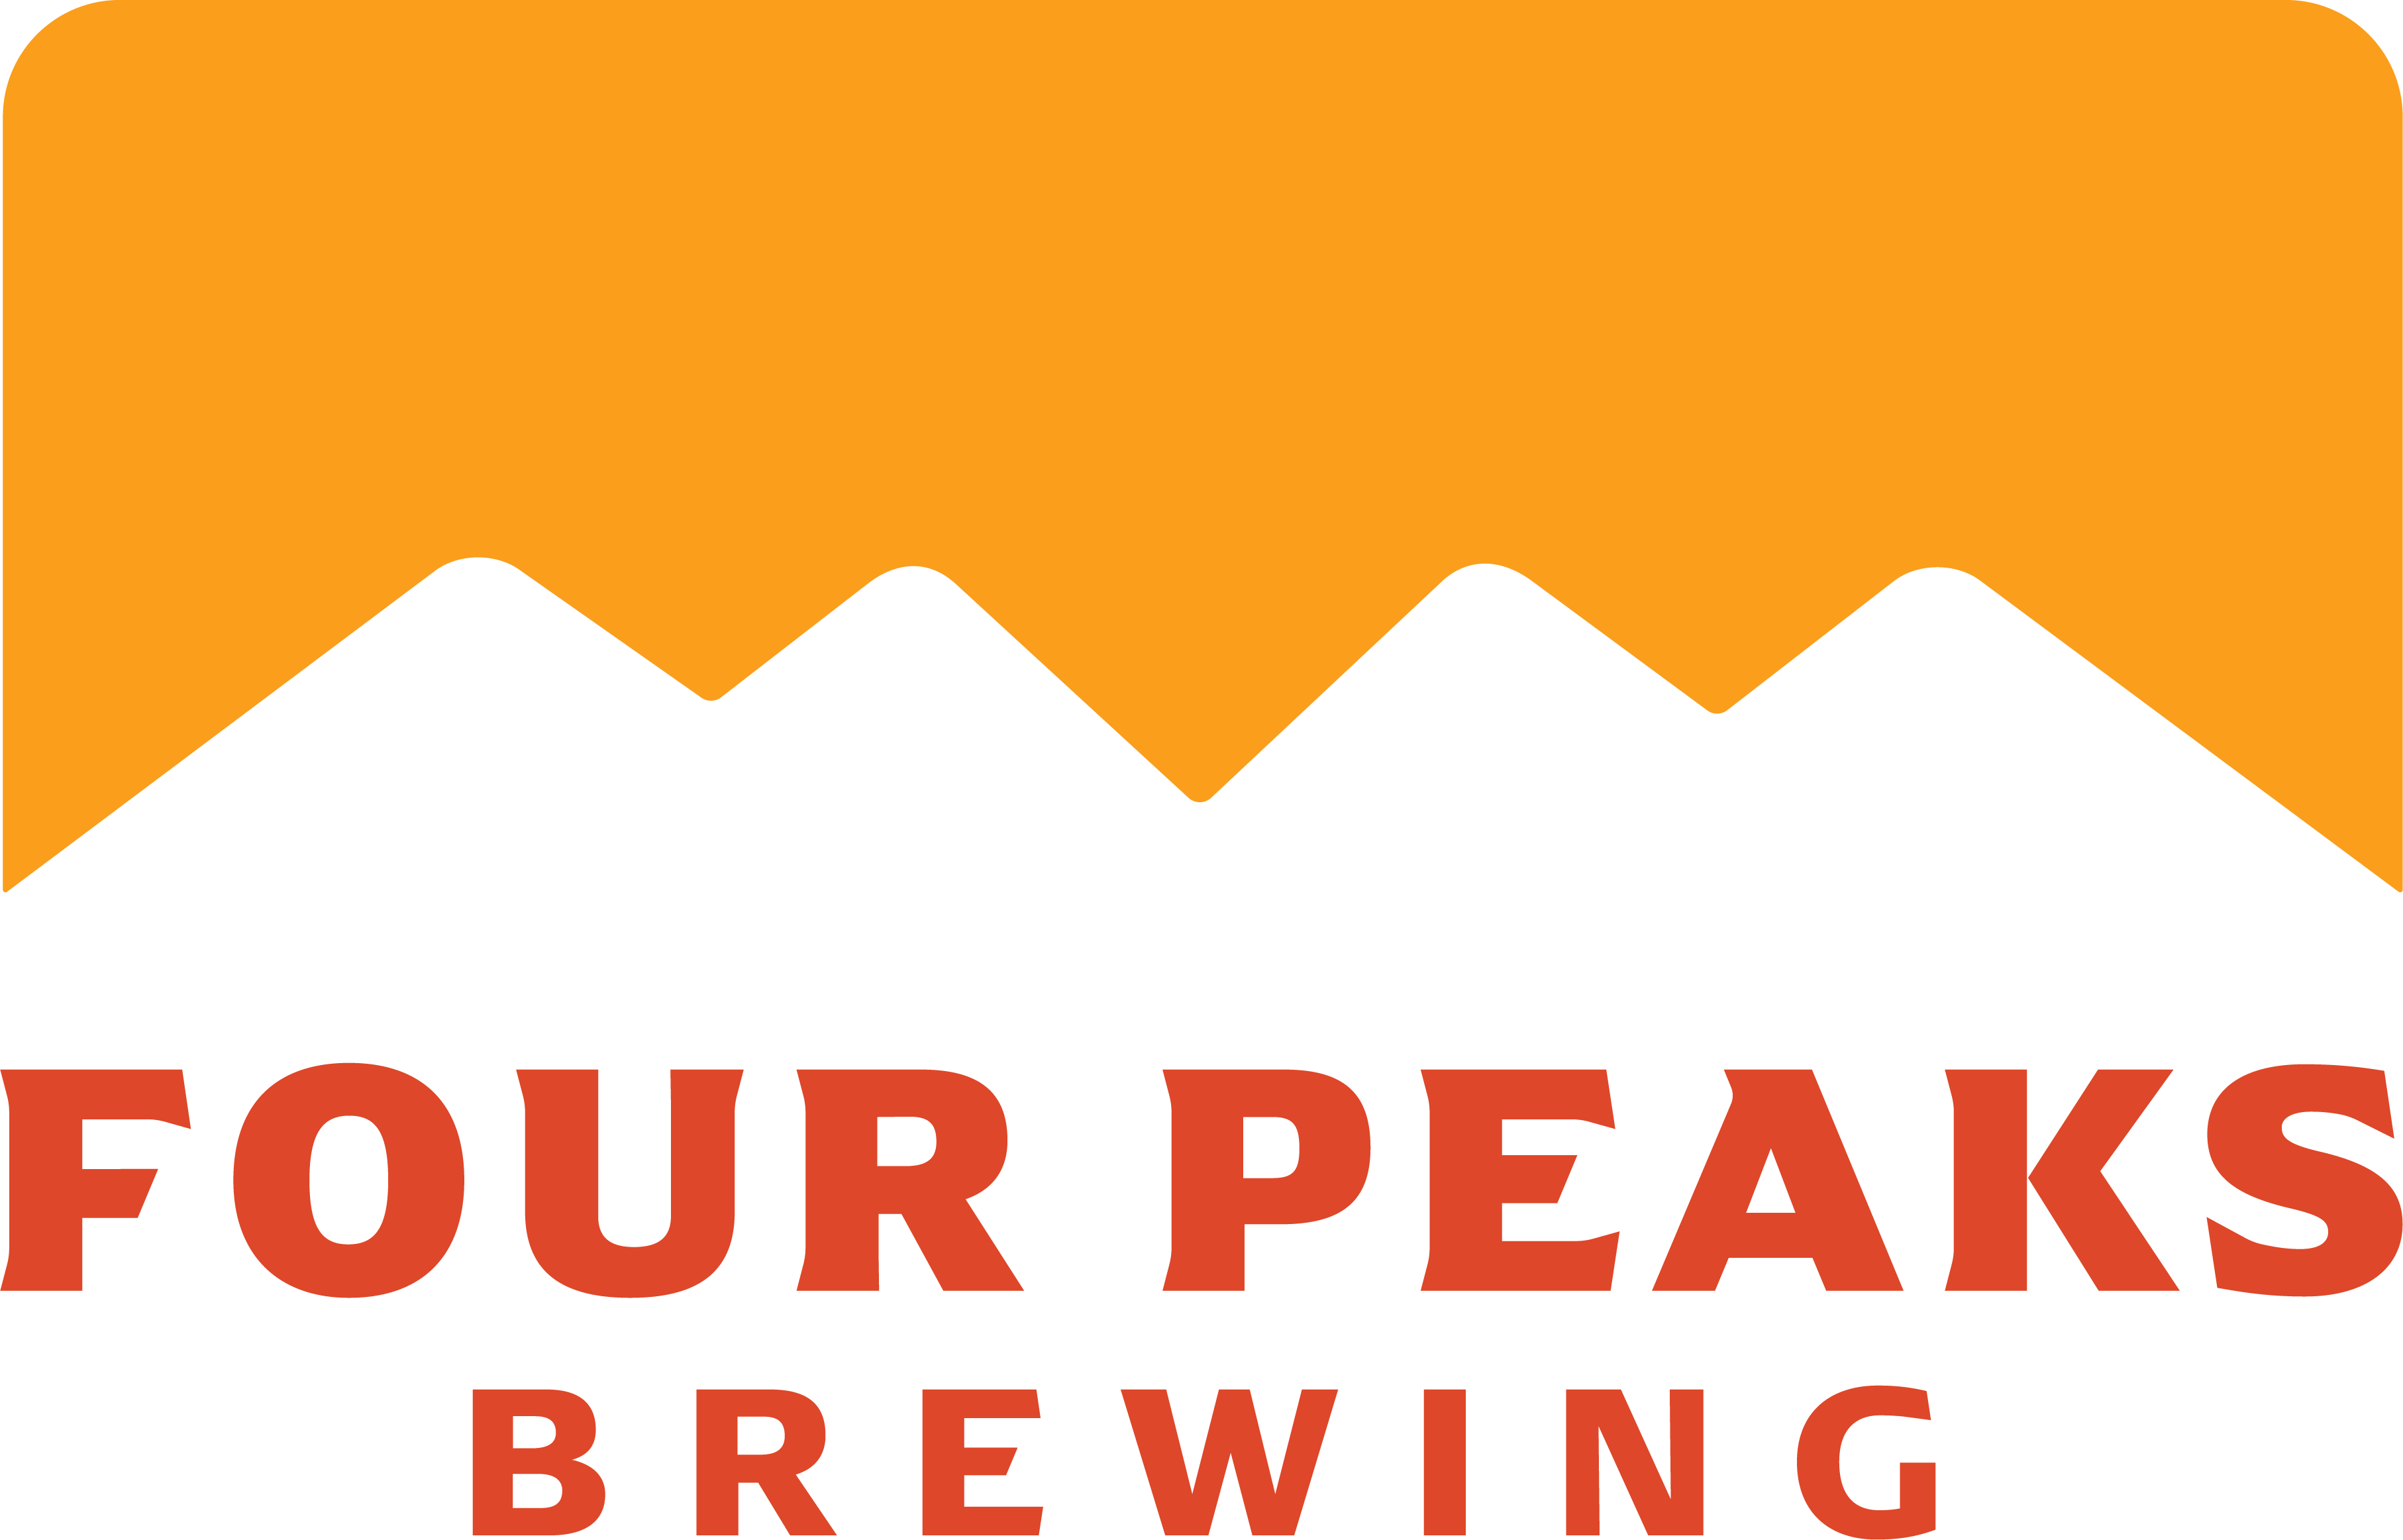 Four Peaks logo